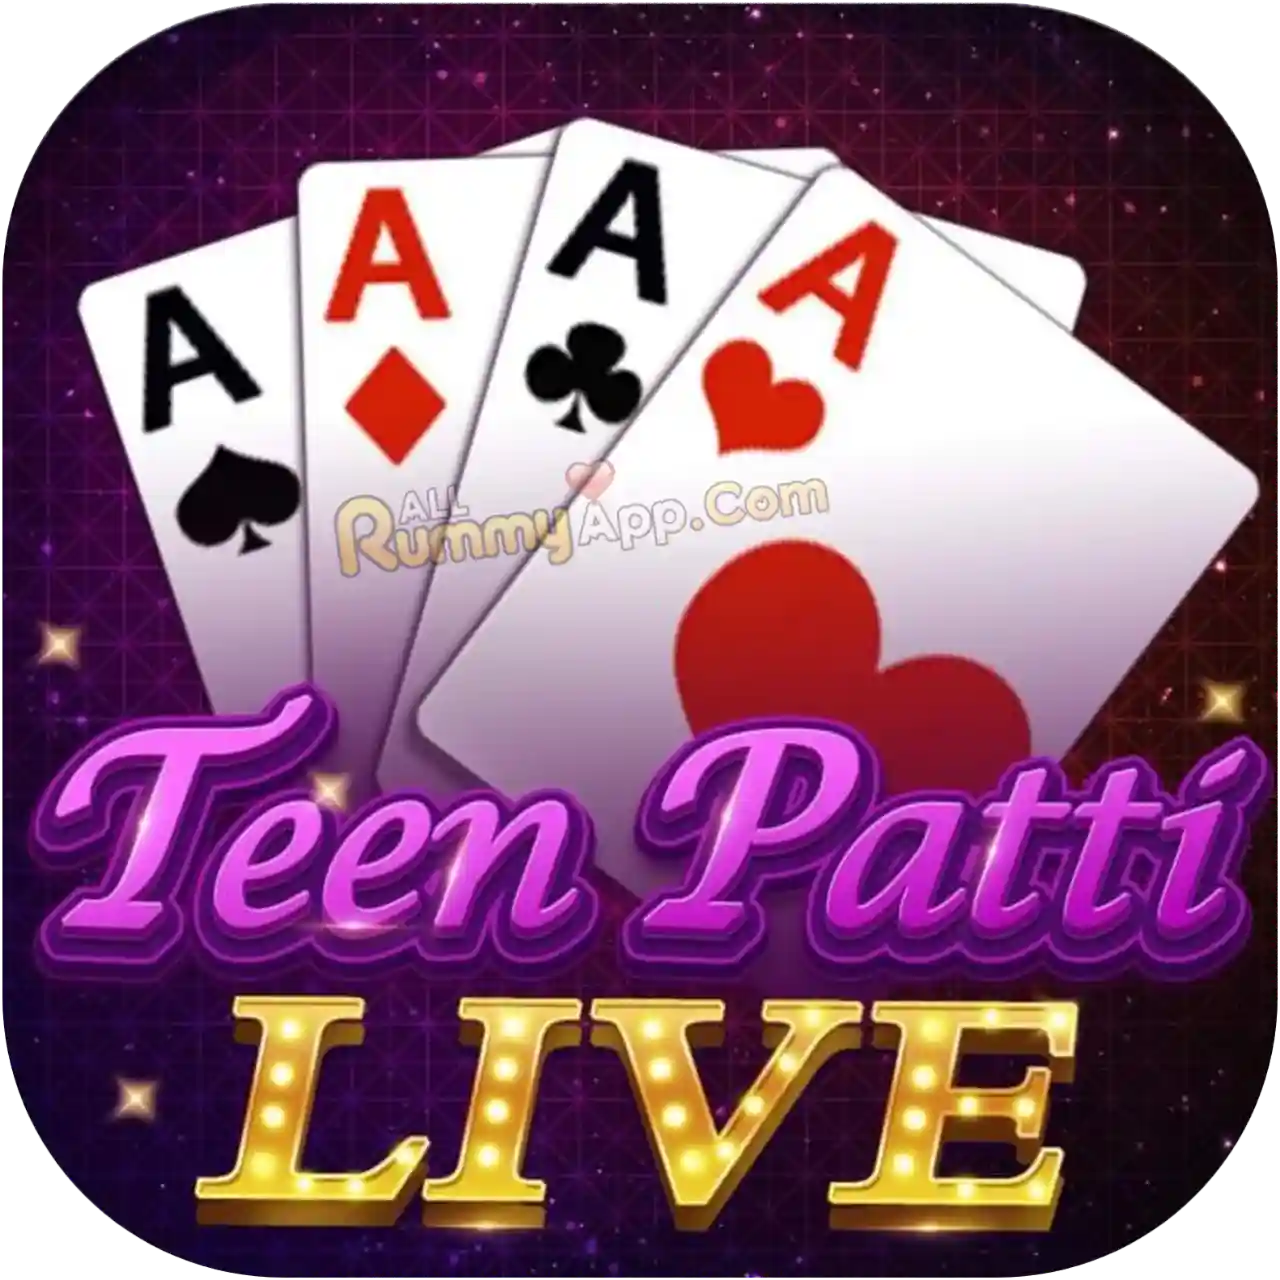 Teen Patti Live - All Rummy App